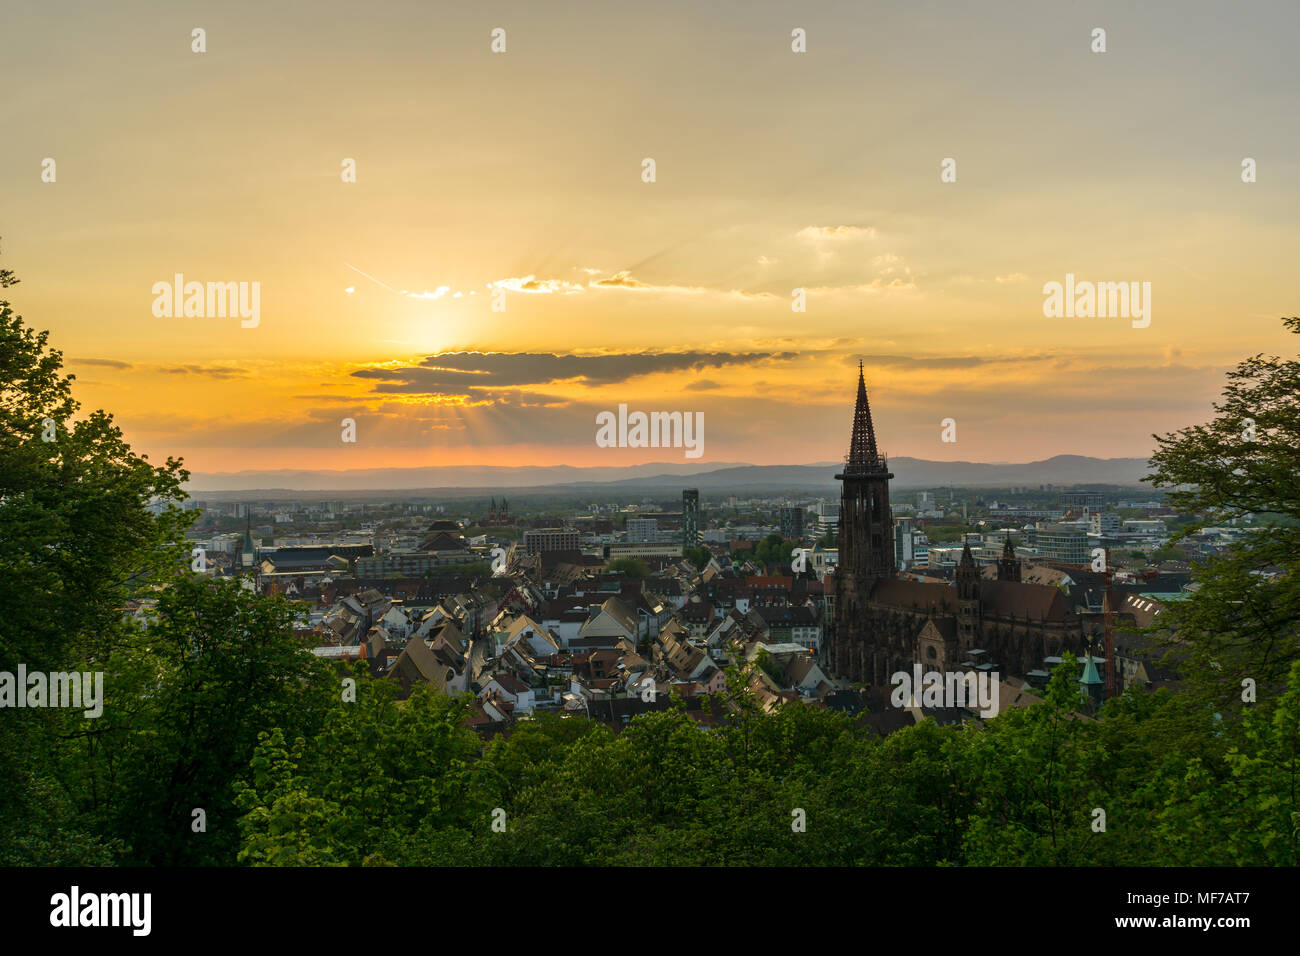 Germania, città Freiburg im Breisgau vista aerea attraverso verdi alberi nella calda luce del tramonto Foto Stock